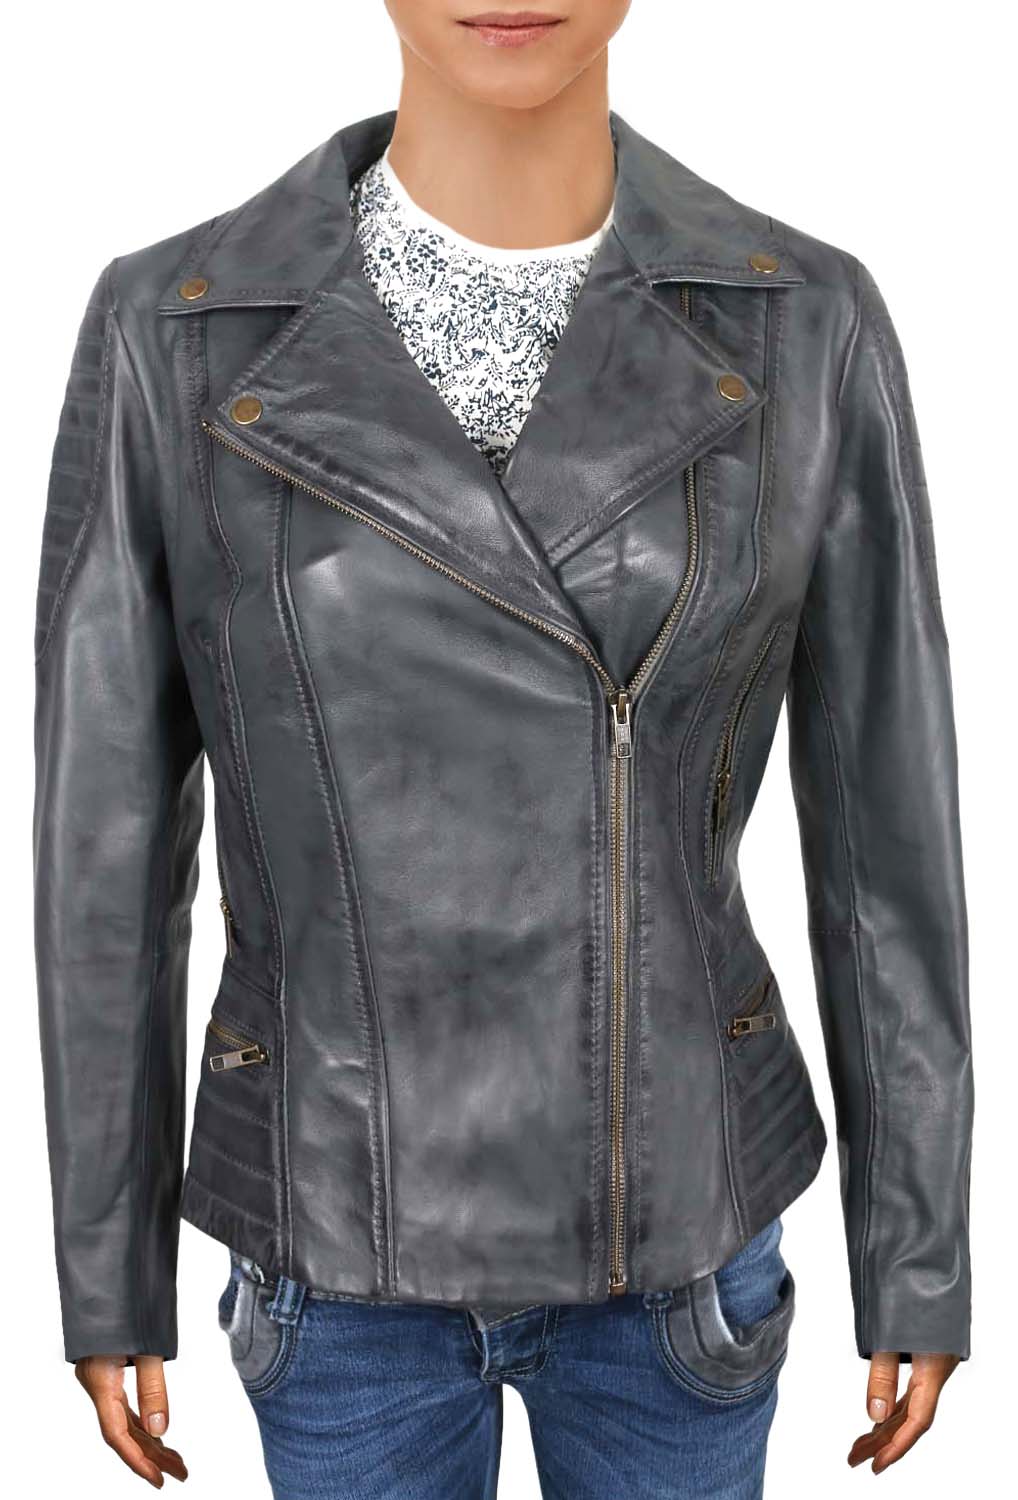 Leather Jackets Hub Womens Genuine Lambskin Leather Jacket (Vax Gray, Double Rider Jacket) - 1821009